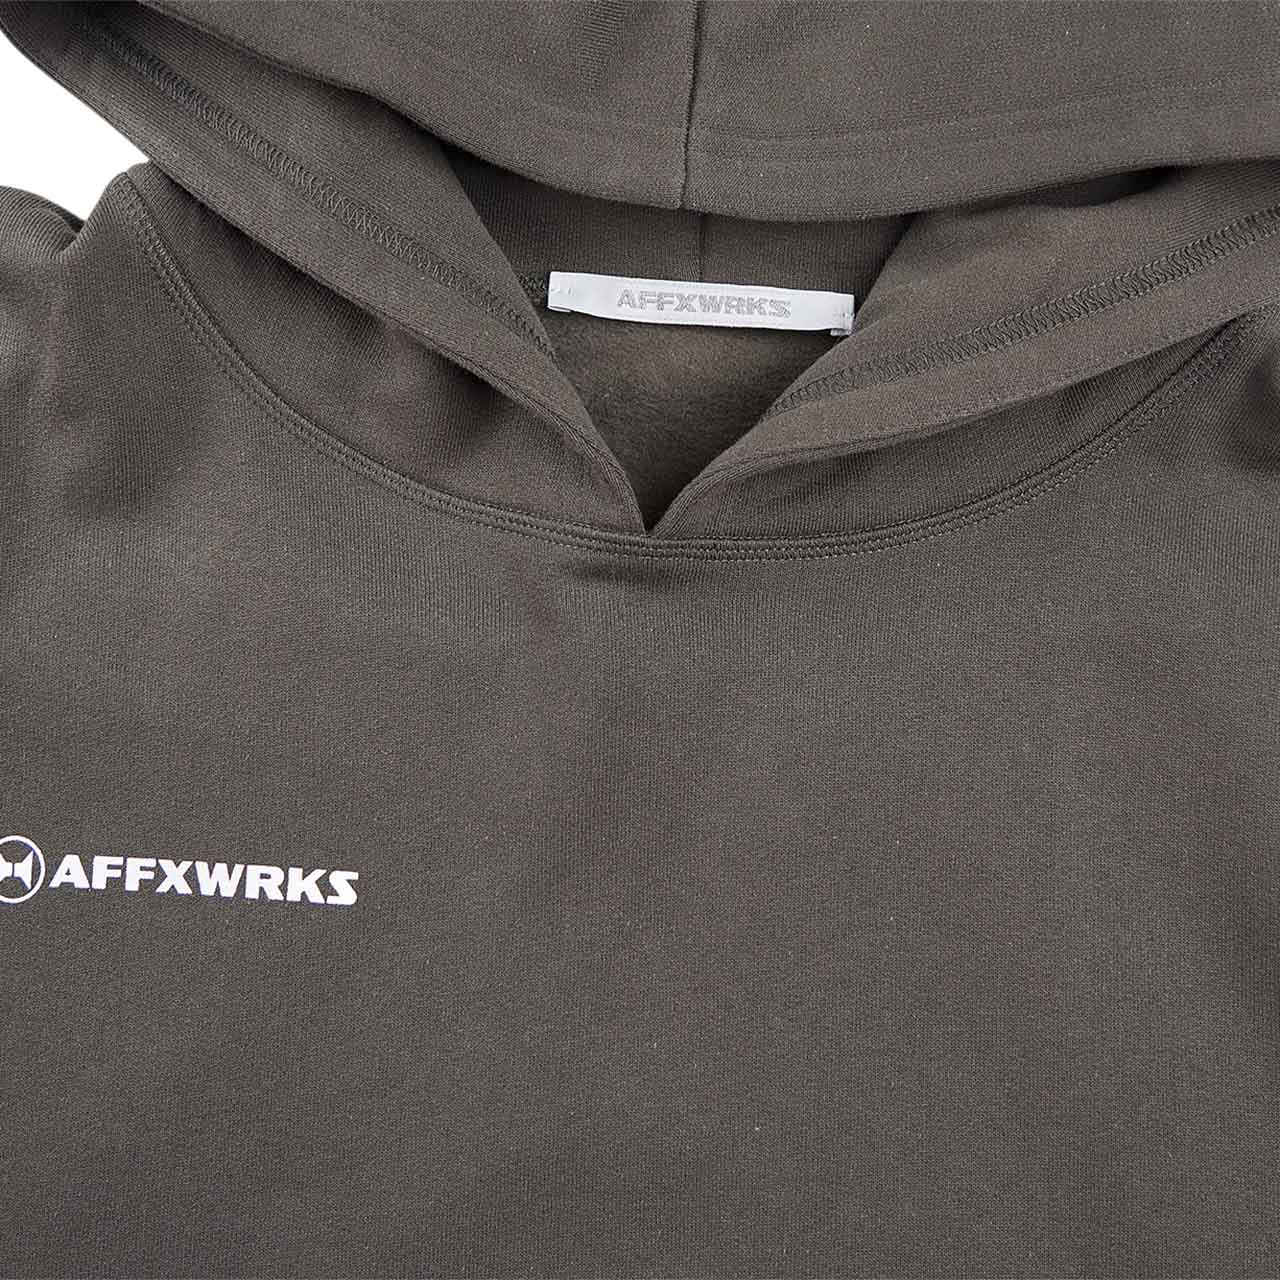 affxwrks hoodie (washed black)